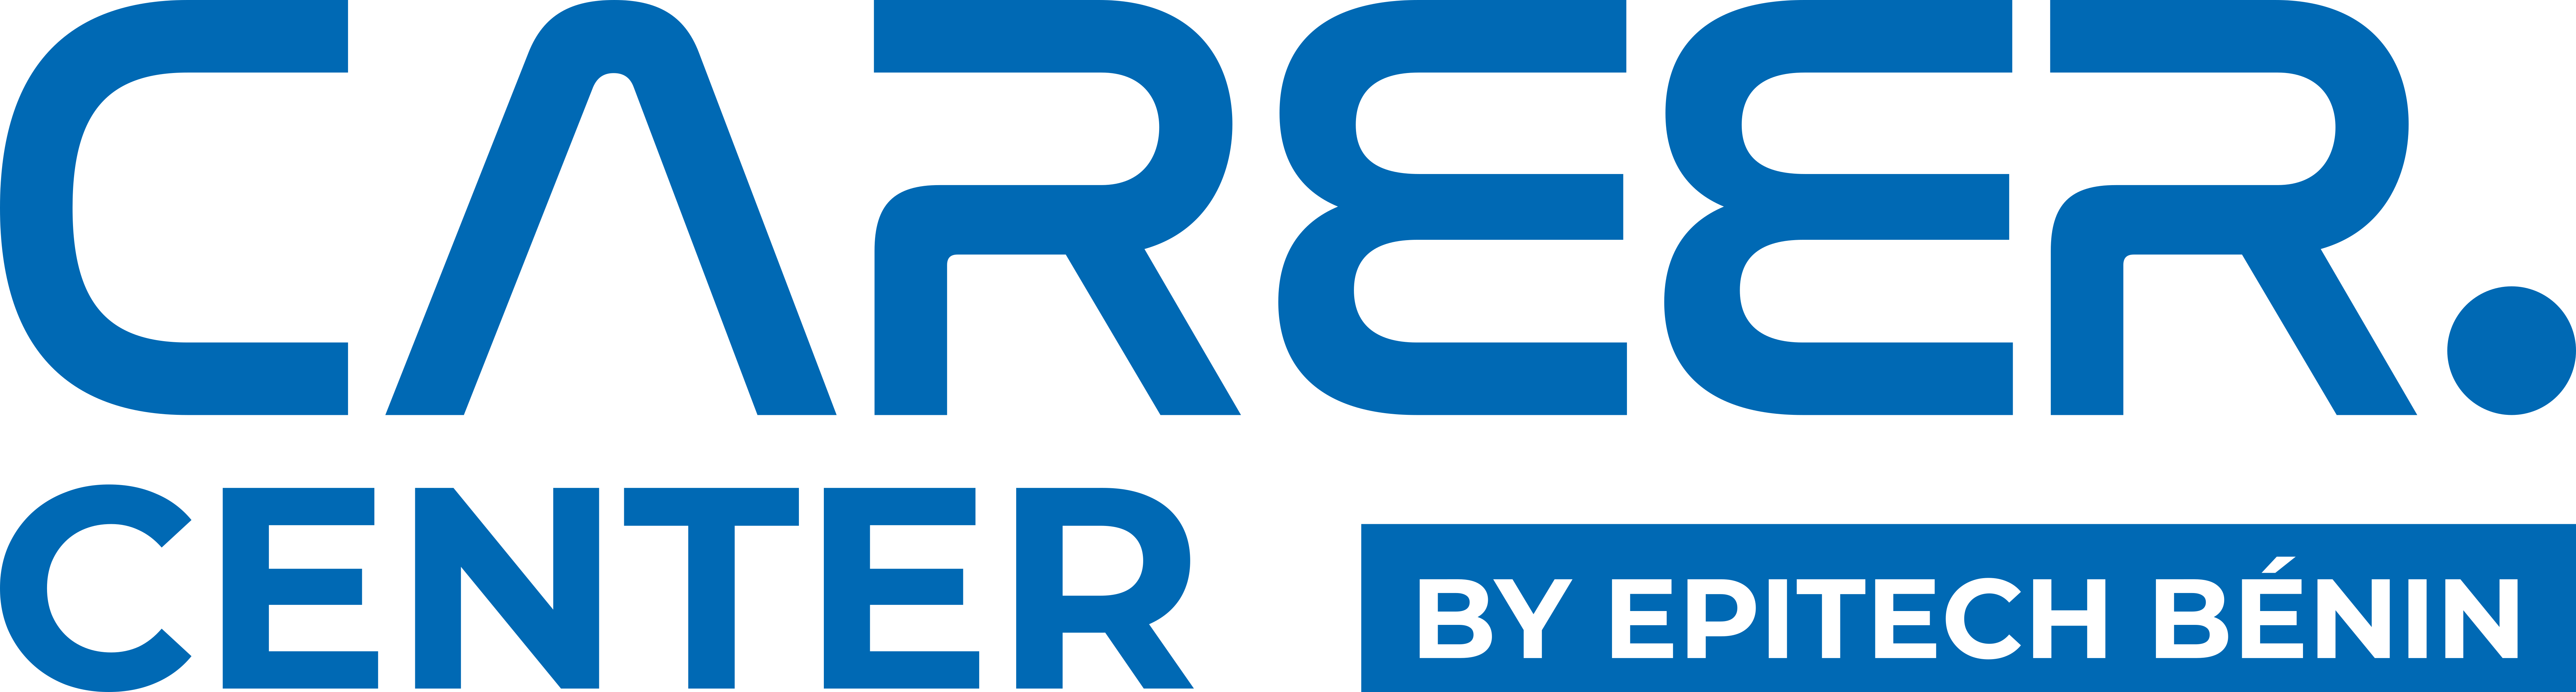 epi-careercenter-logo-typo-blue